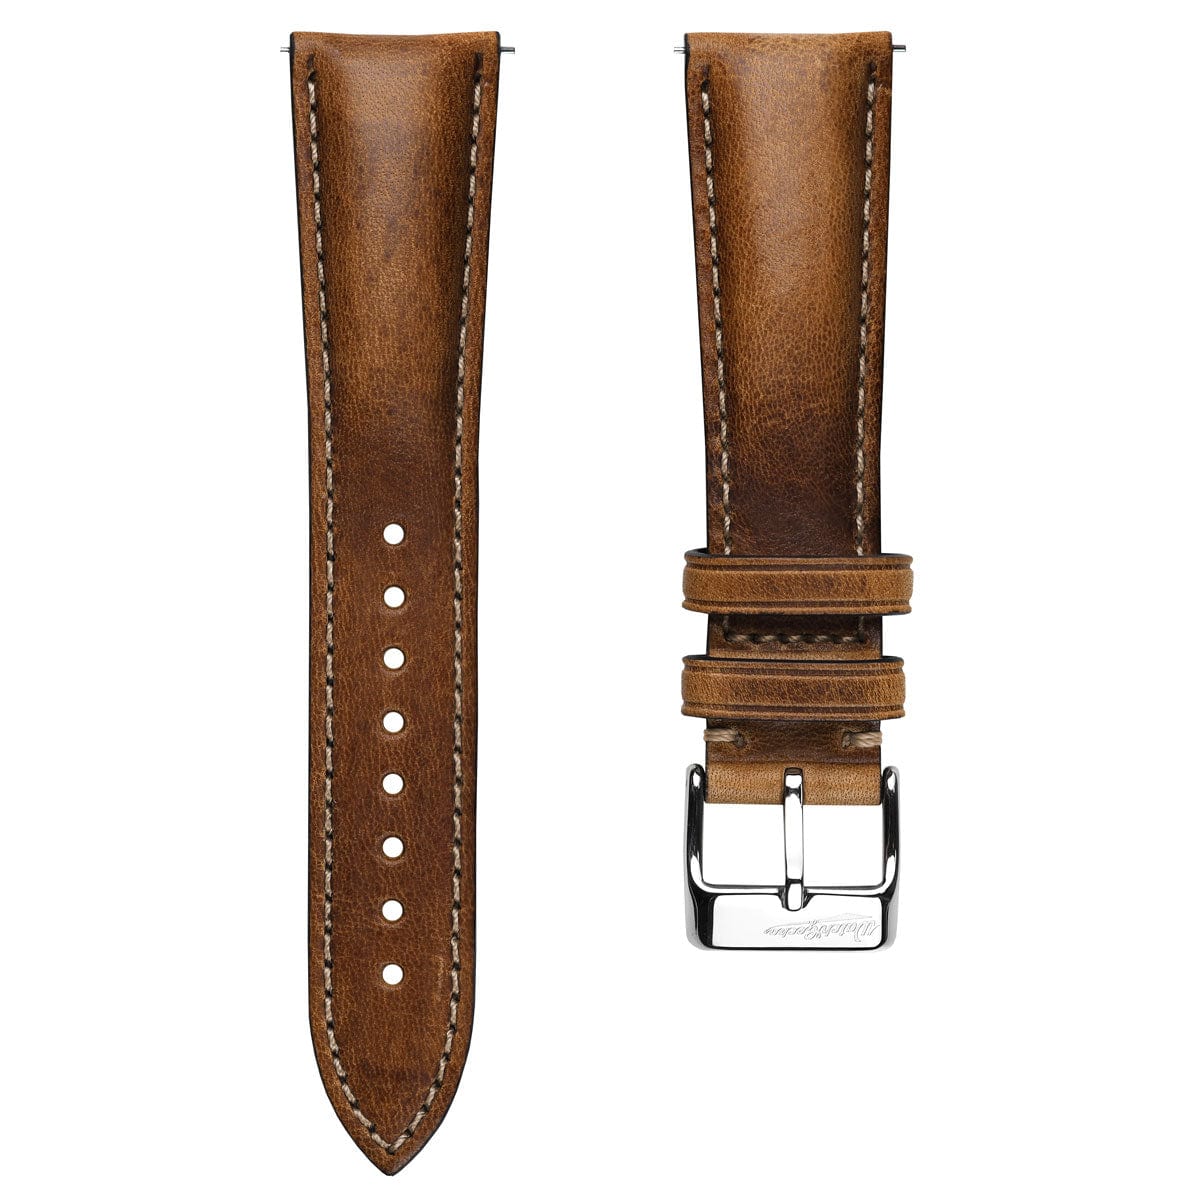 Vintage Highley Genuine Leather Watch Strap - Light Brown | WatchGecko